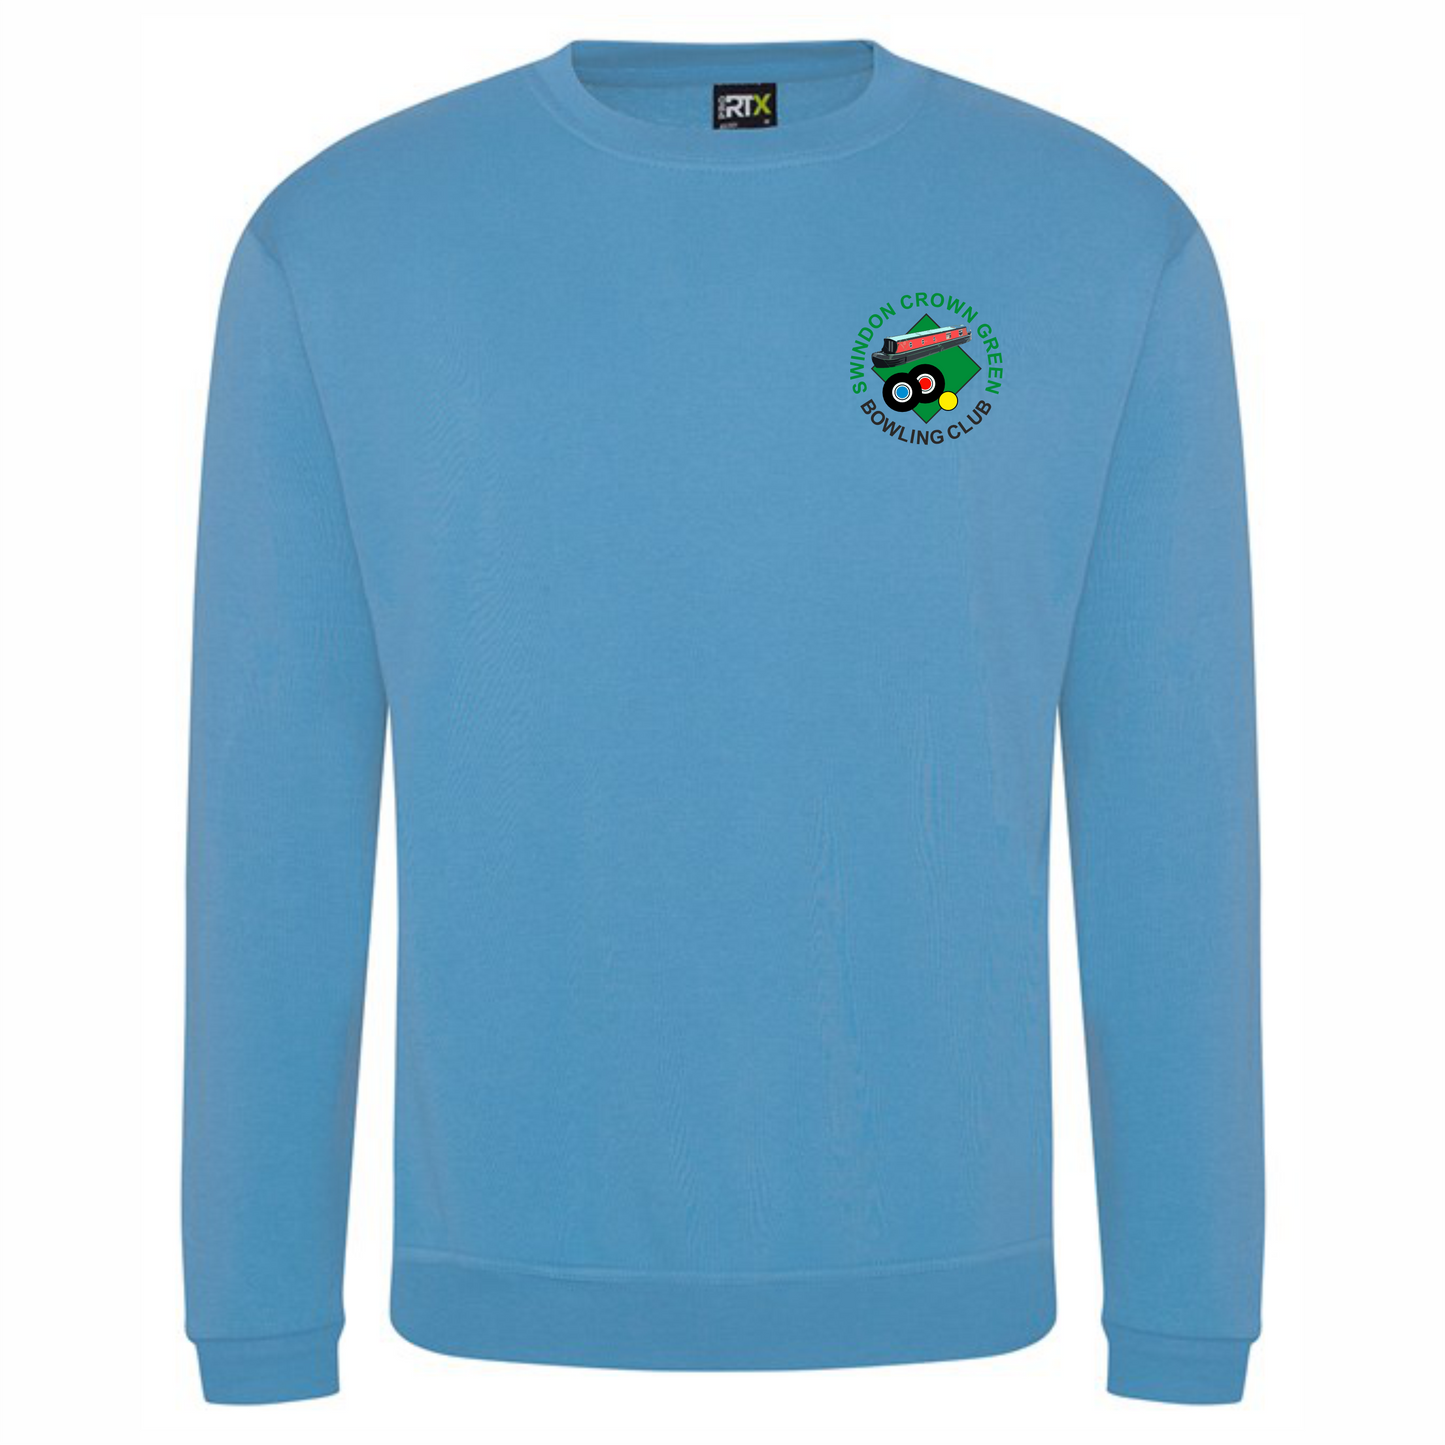 Swindon Crown Green Bowling Club - Sweatshirt